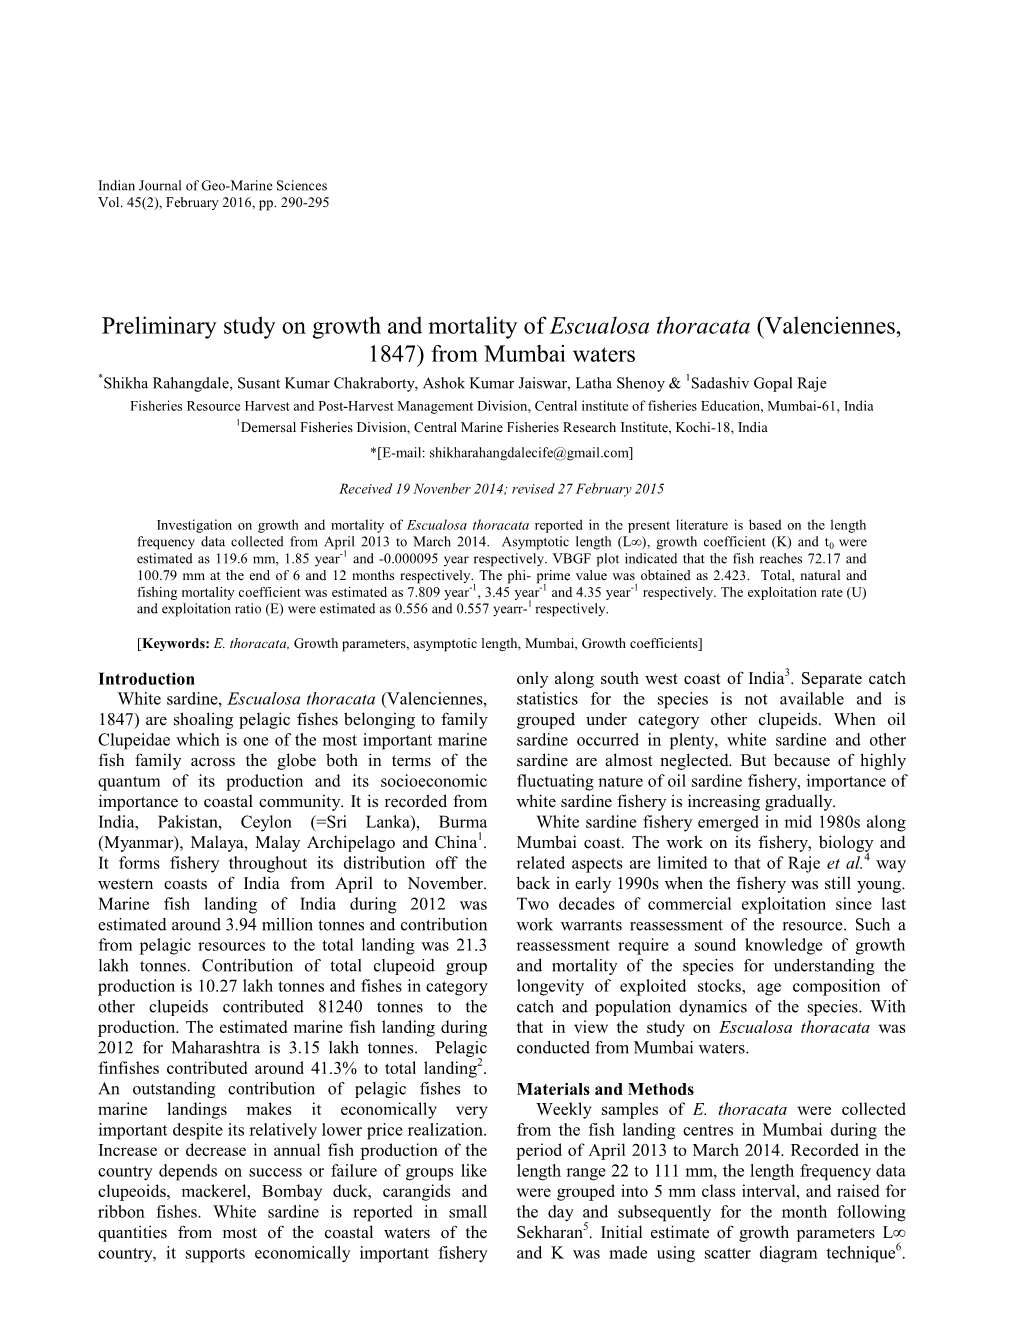 Preliminary Study on Growth and Mortality of Escualosa